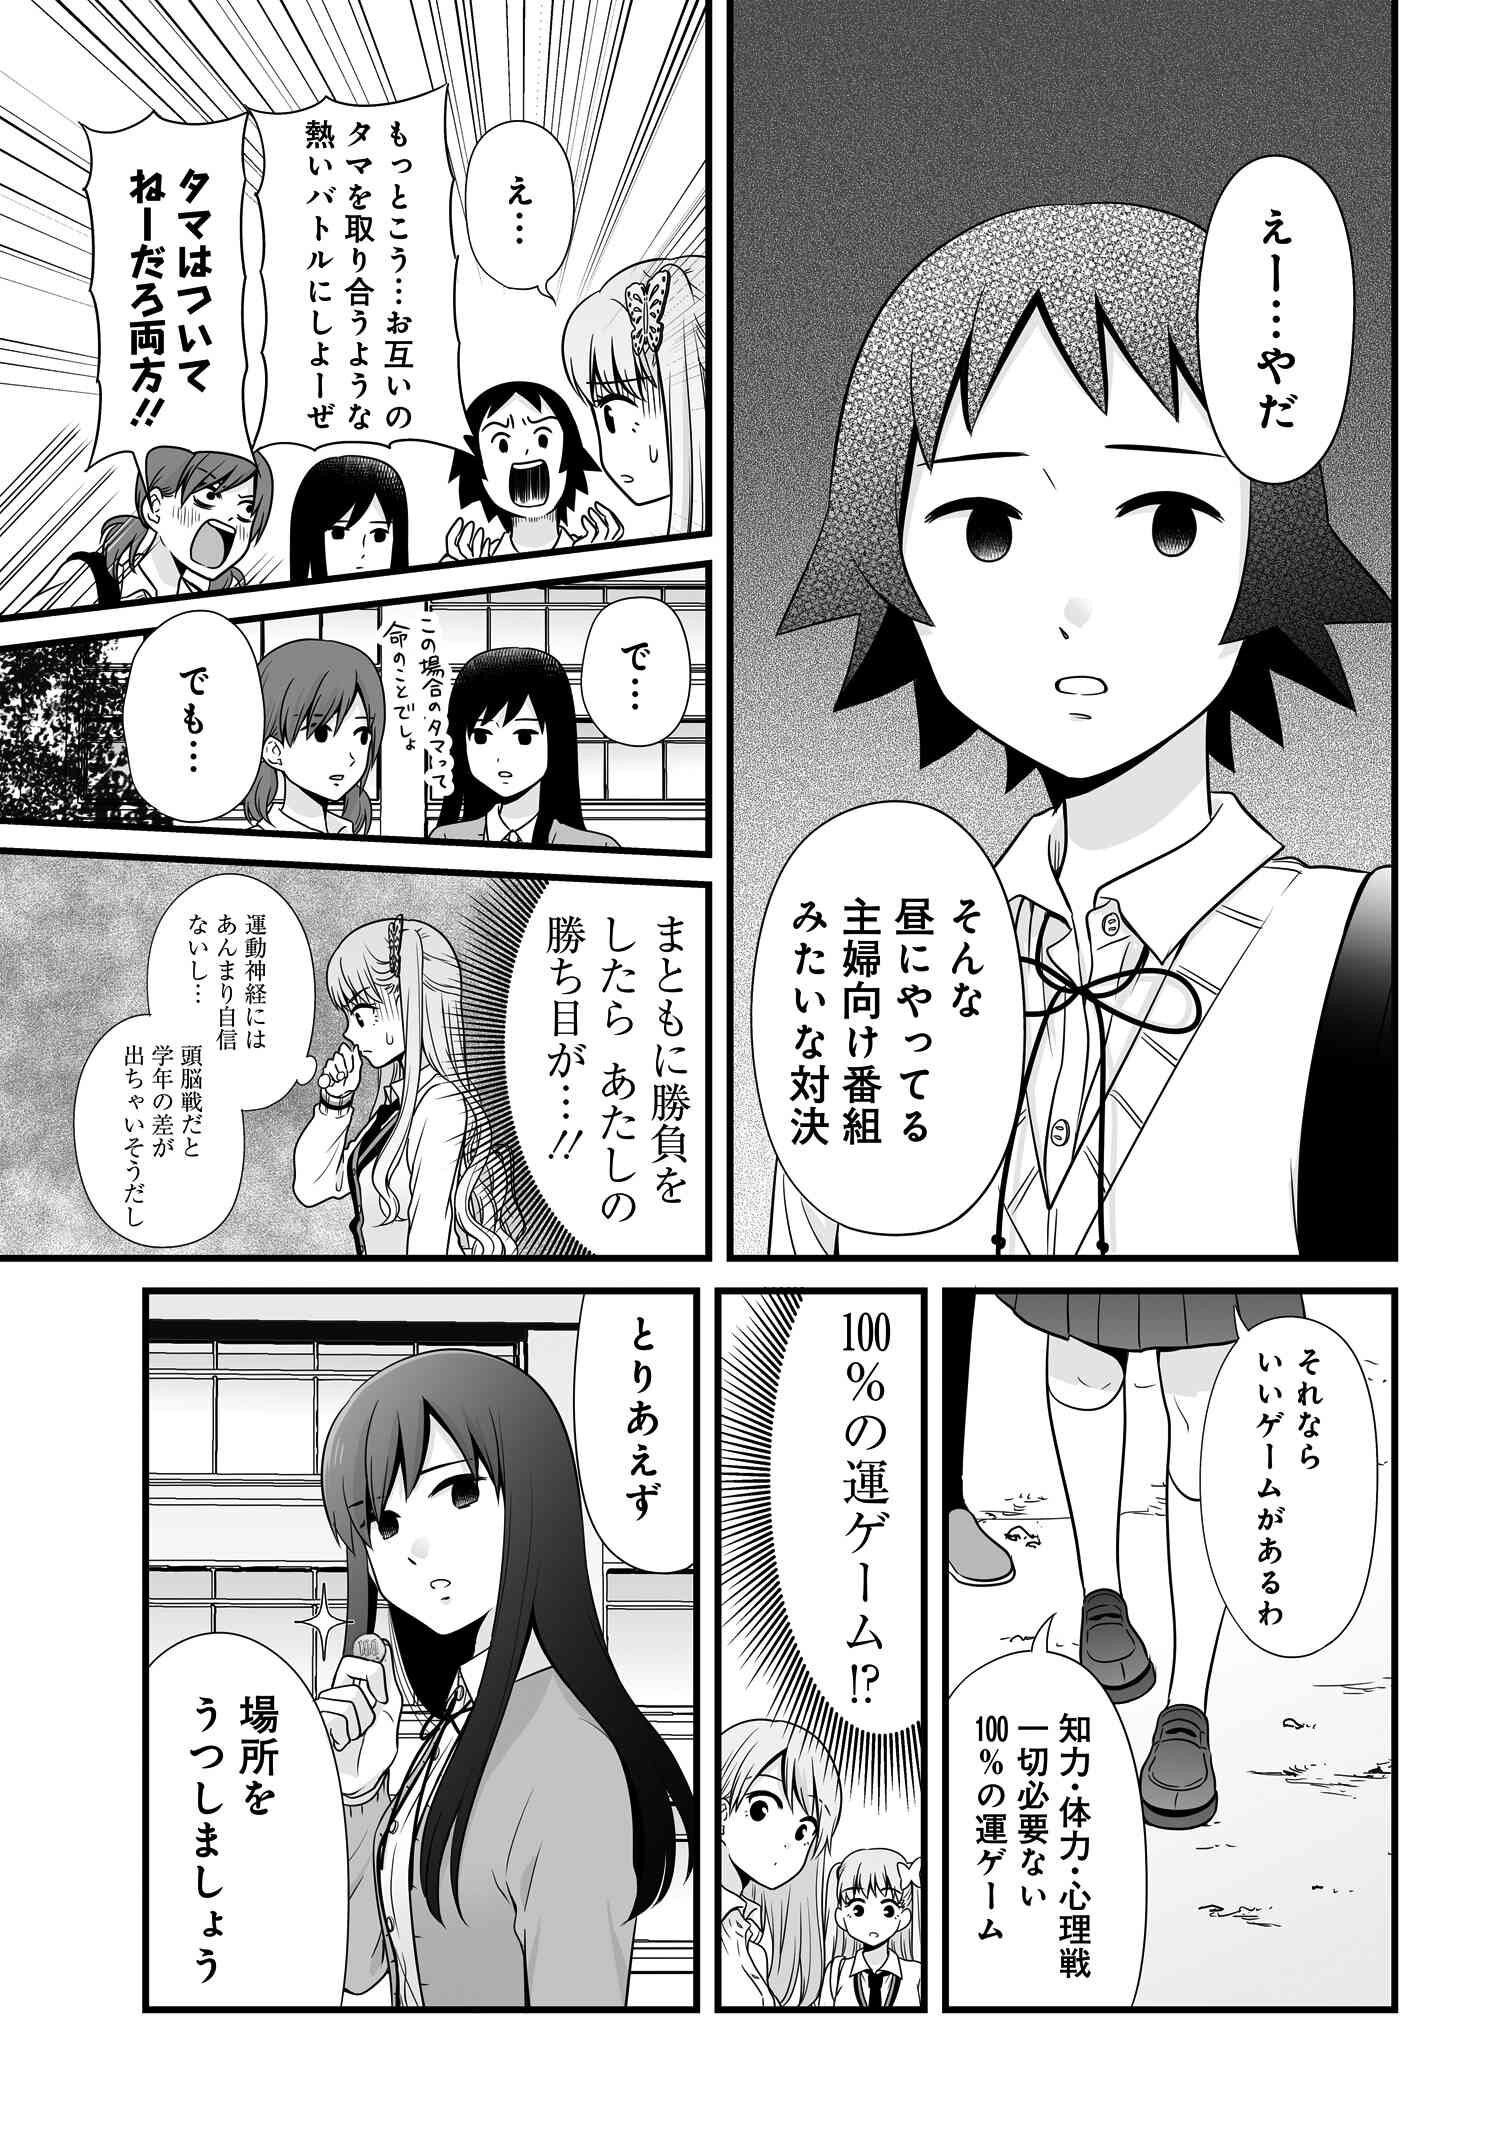 Joshikousei no Mudazukai - Chapter 090 - Page 4